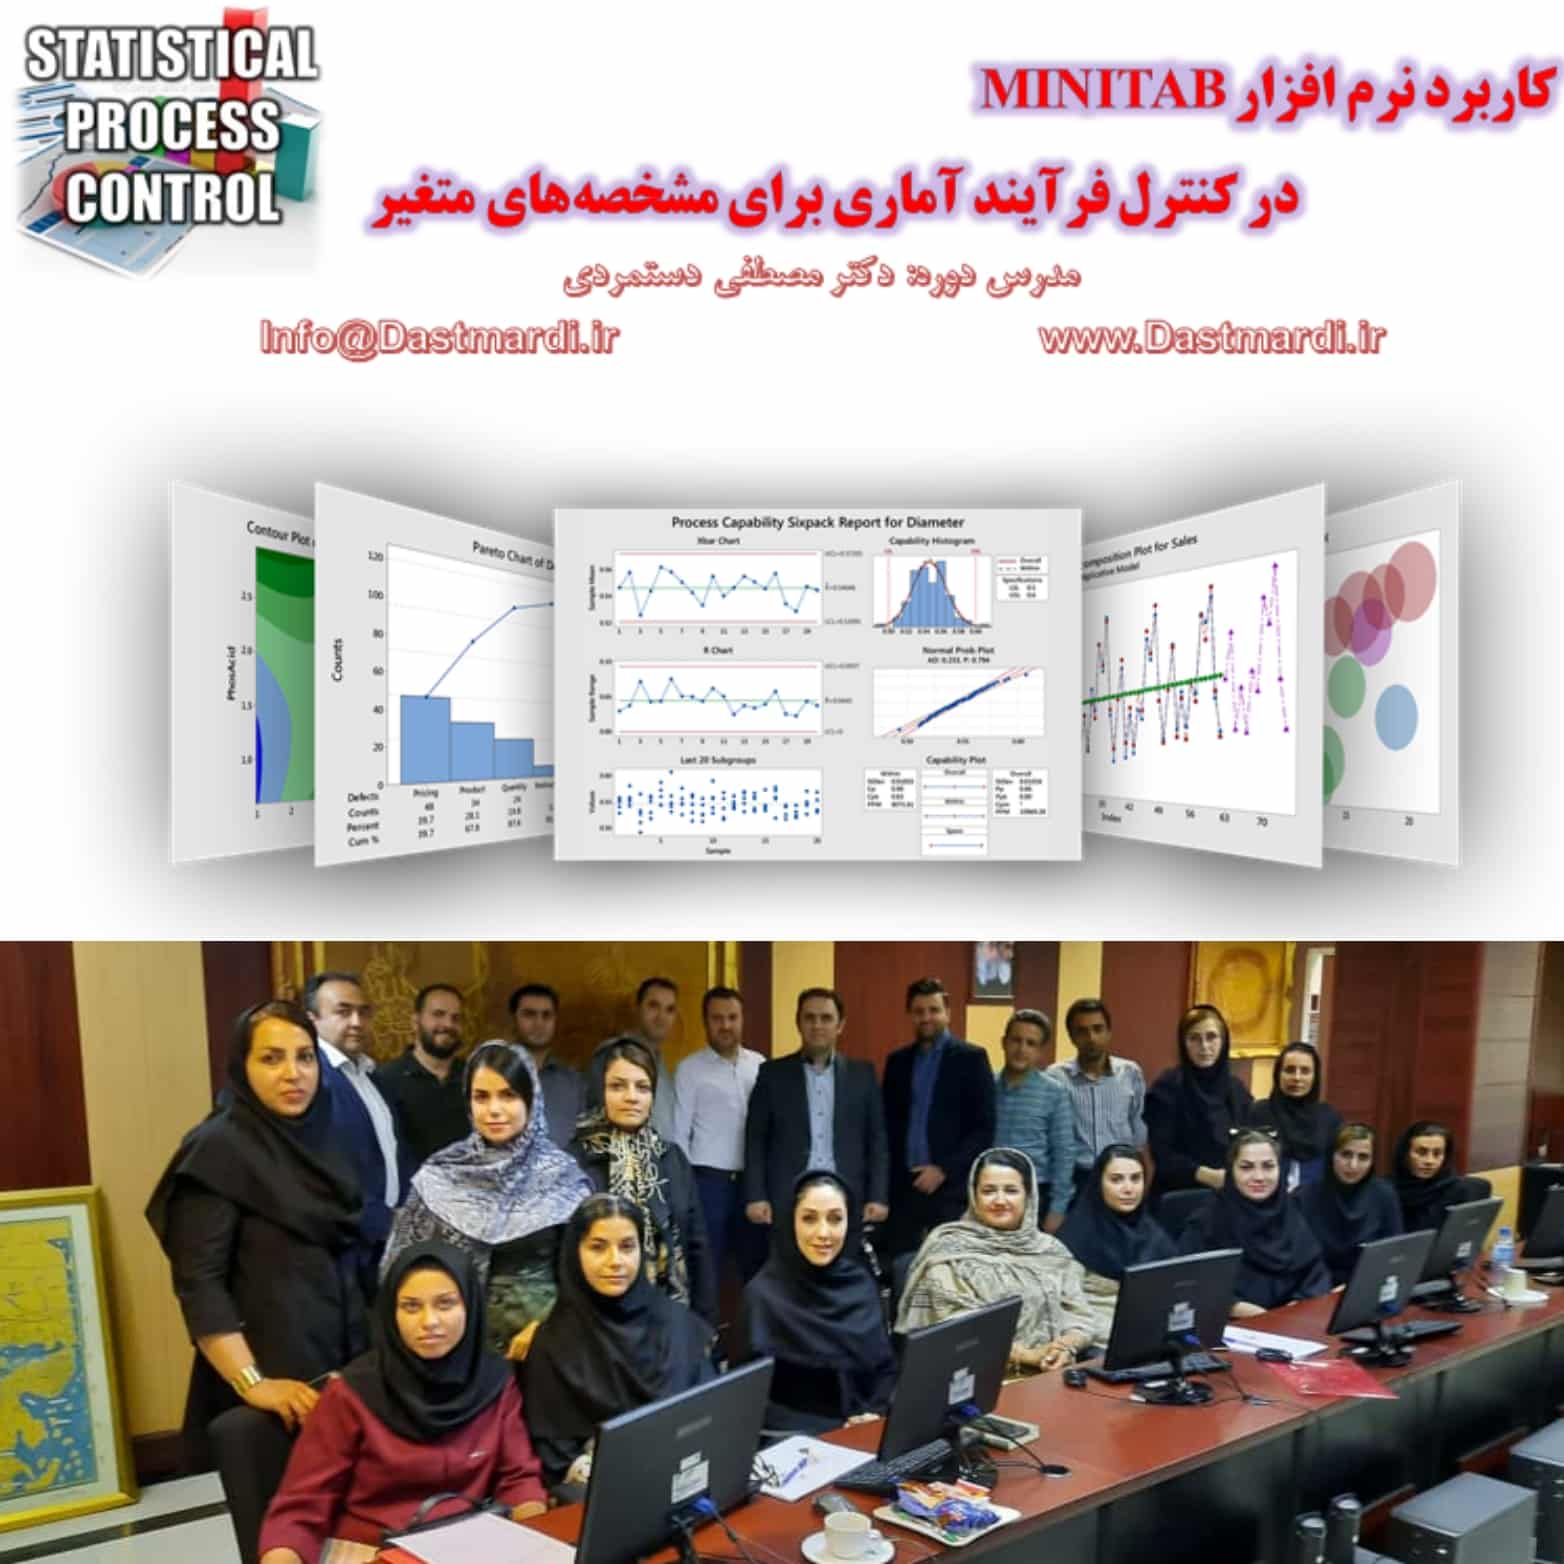 IMG 20200220 150014 برگزاری آموزش نرم افزار MINITAB برای کنترل فرایند آماری در منطقه آزاد کیش